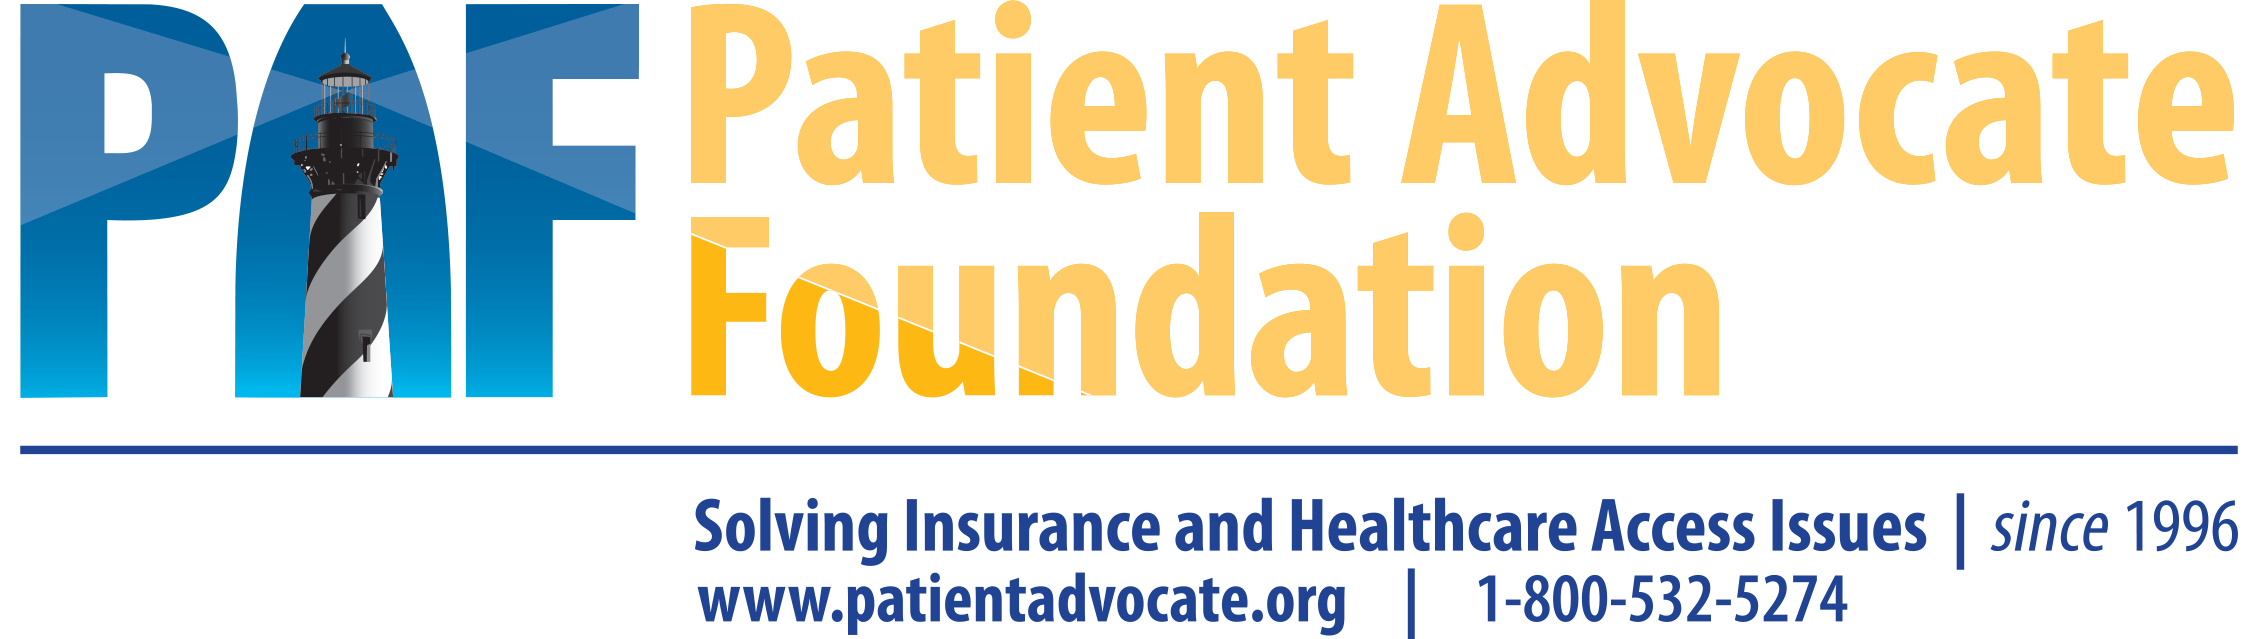 patient advocate brand logo